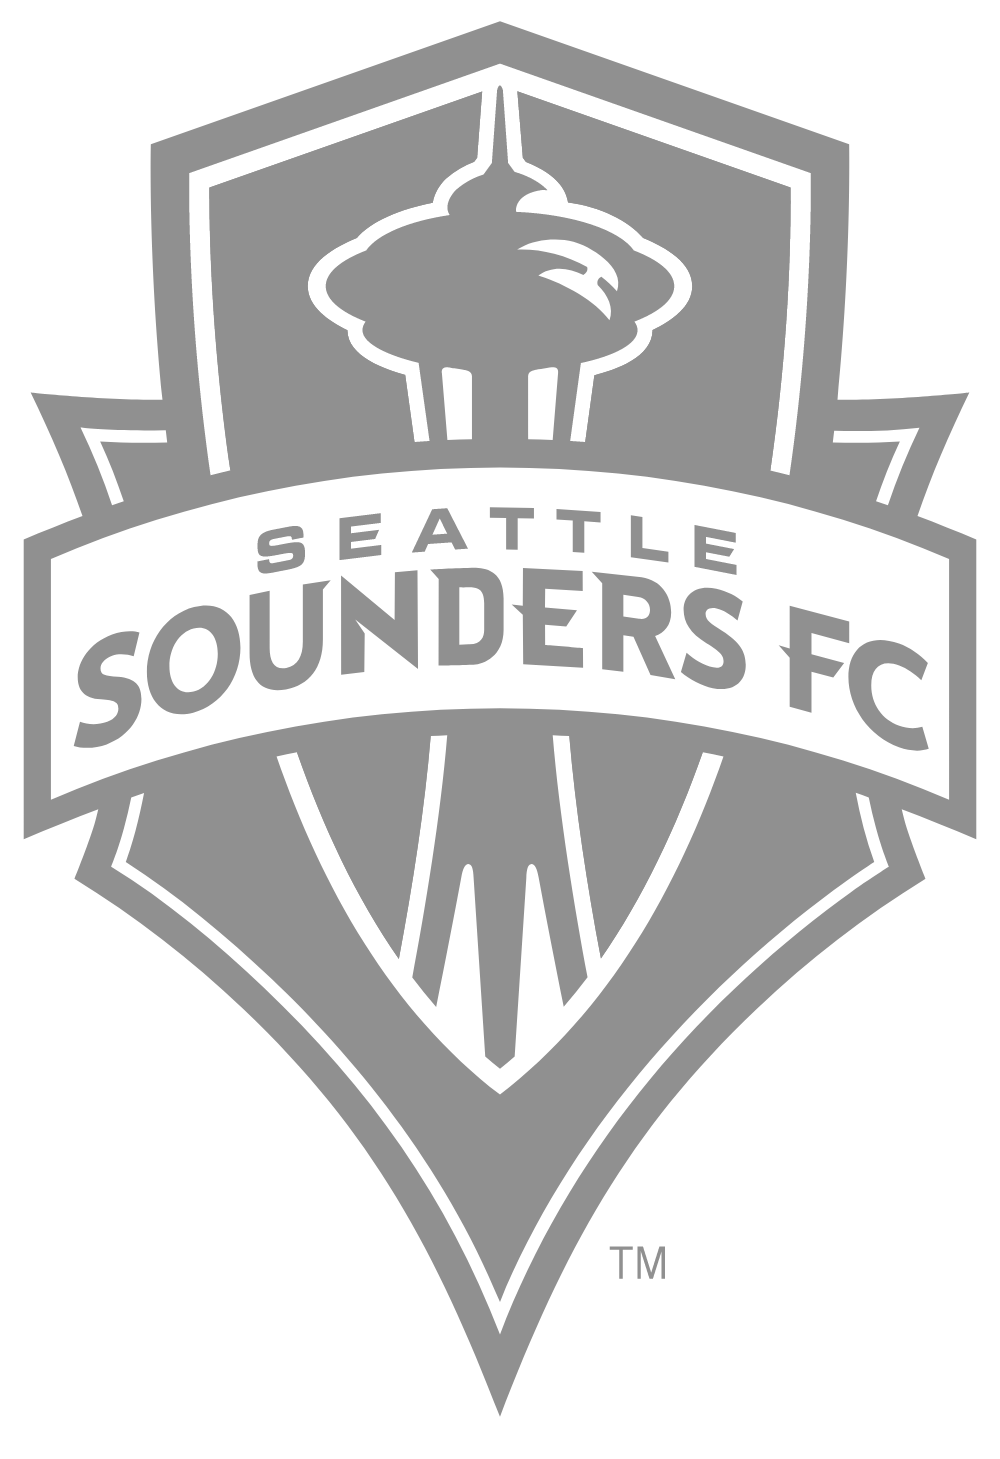 Sattle Sounders Logo Logos